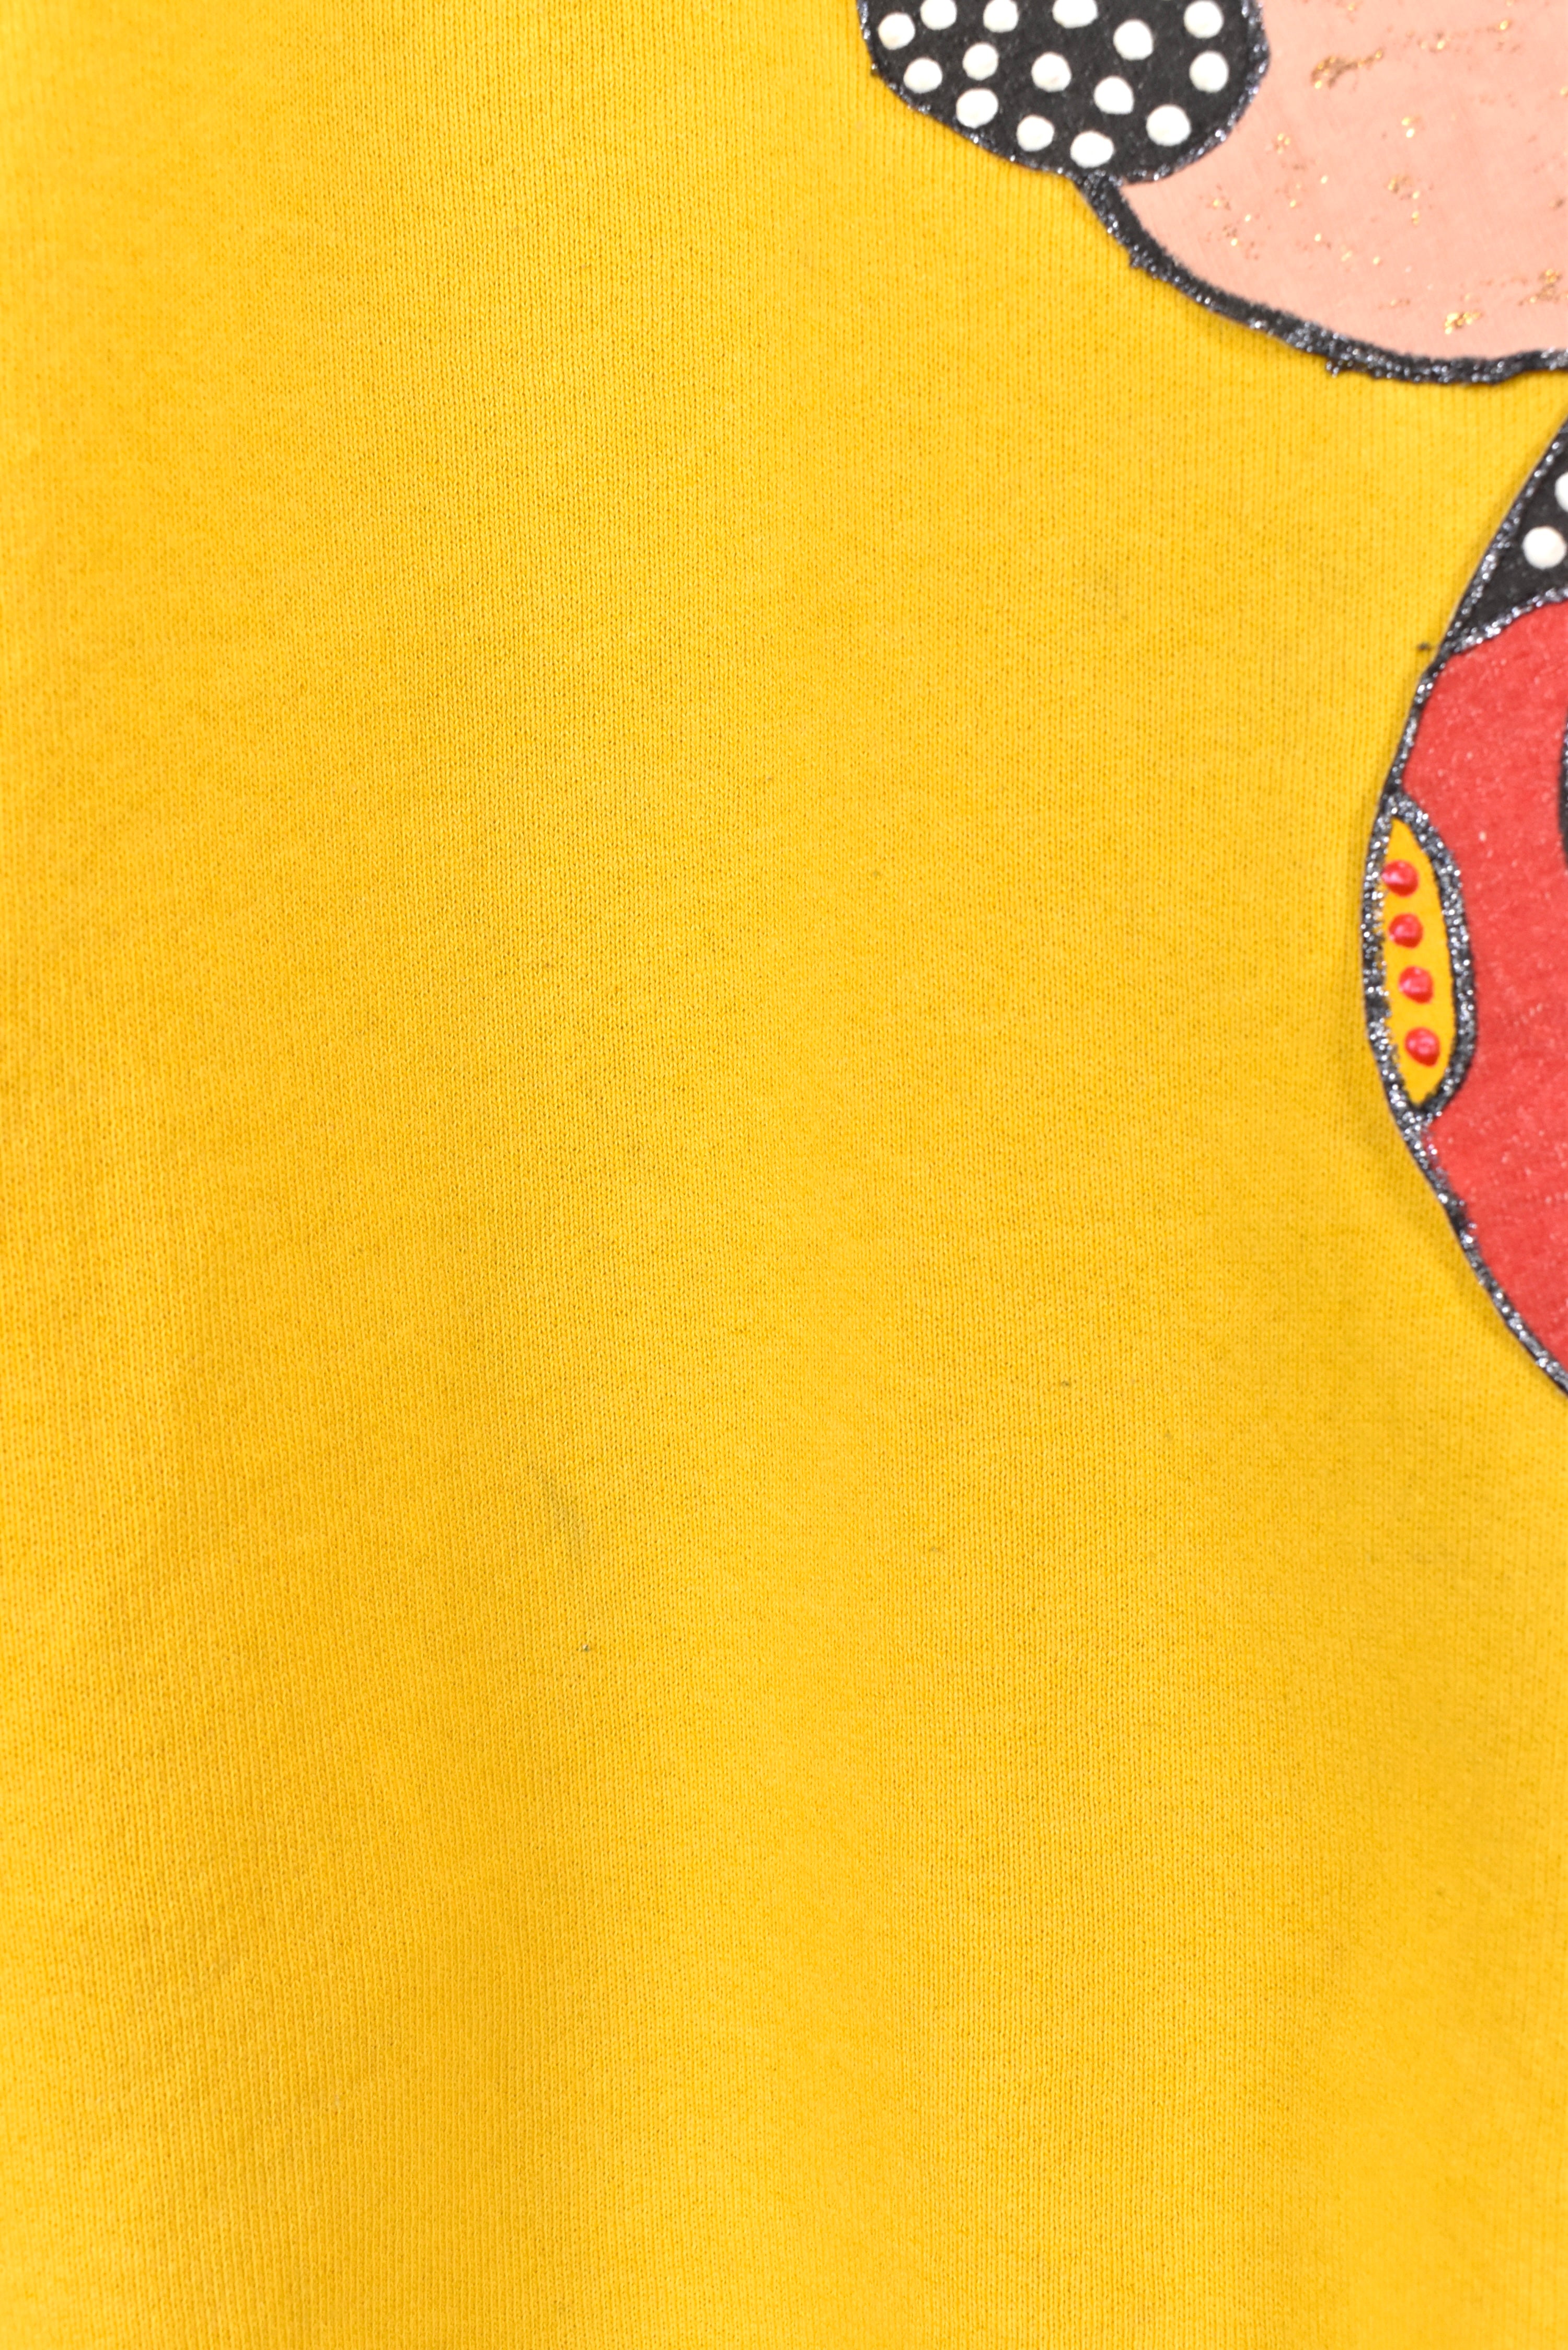 Custom Mickey Mouse sweatshirt, yellow graphic crewneck - AU S DISNEY / CARTOON